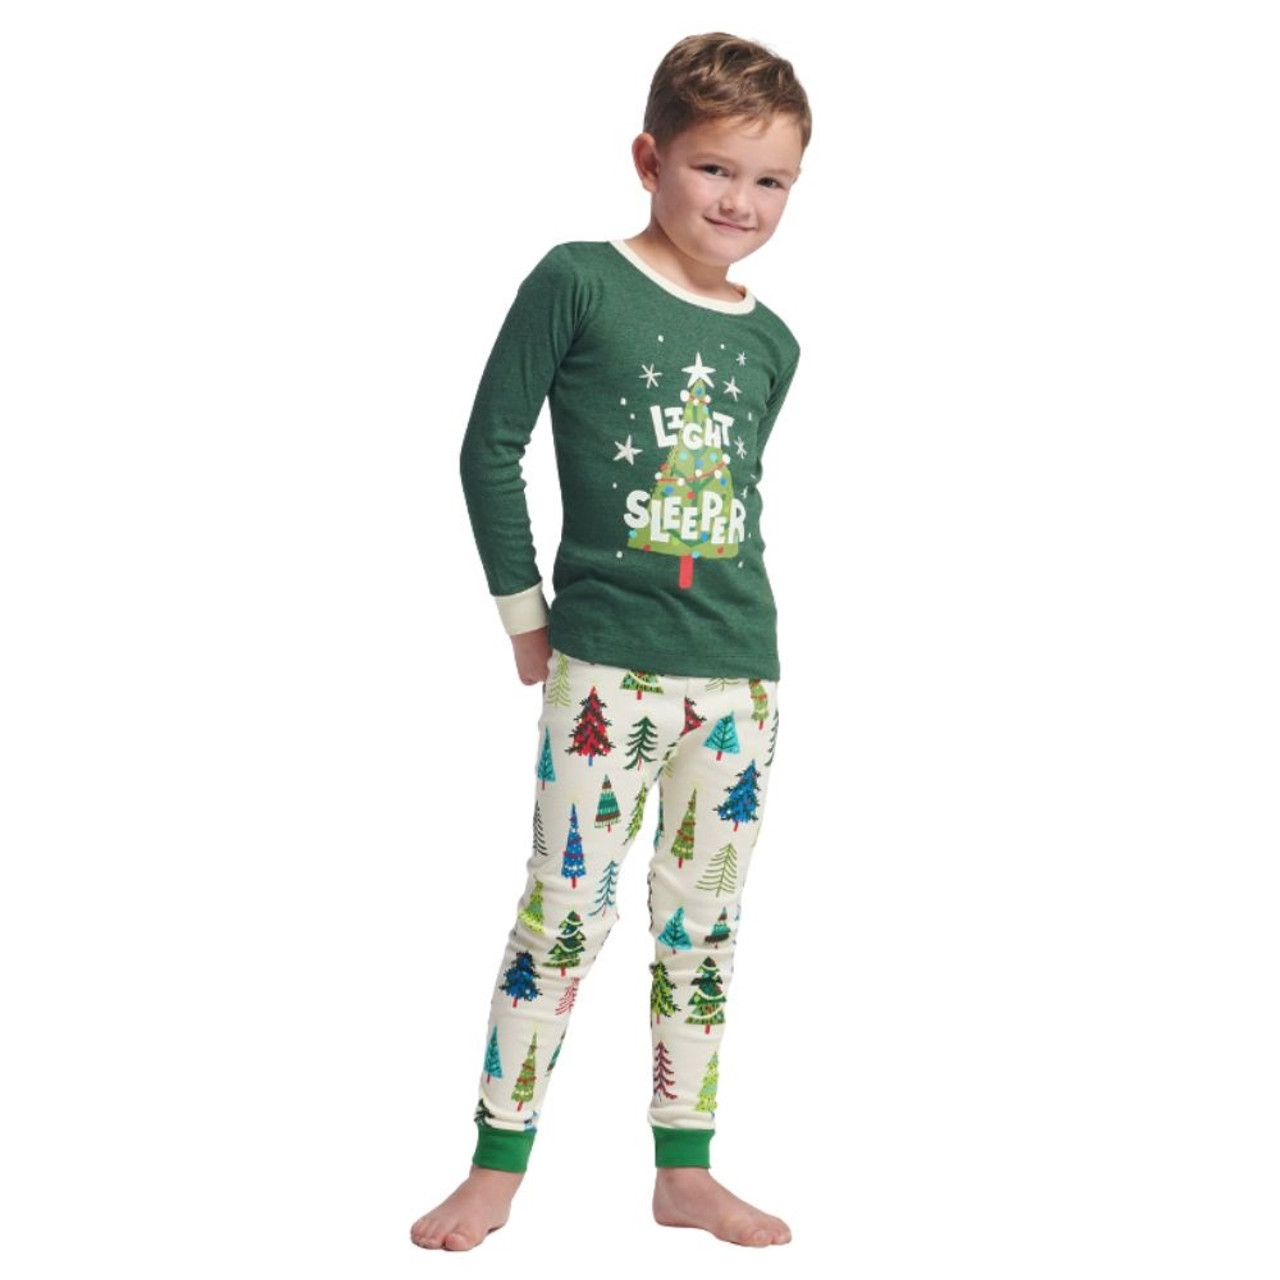 Light Sleeper Kids 2-Piece Pajama Set by Hatley